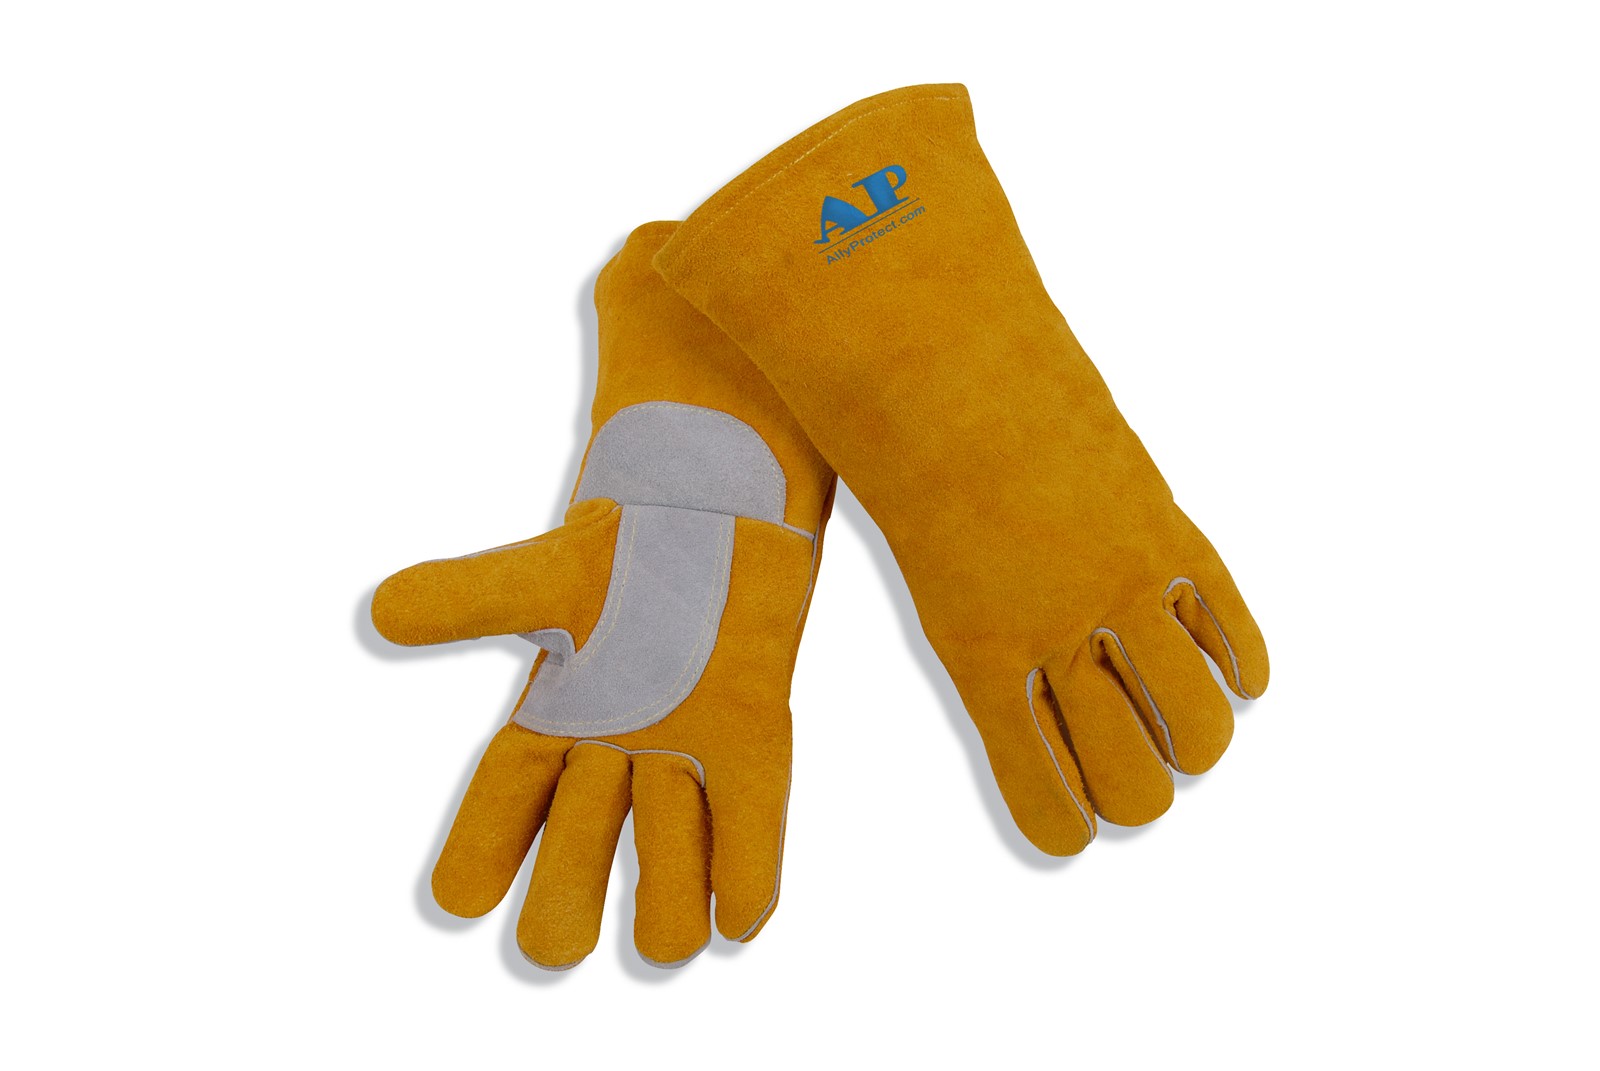 AP2202 Fashion leather welding glove